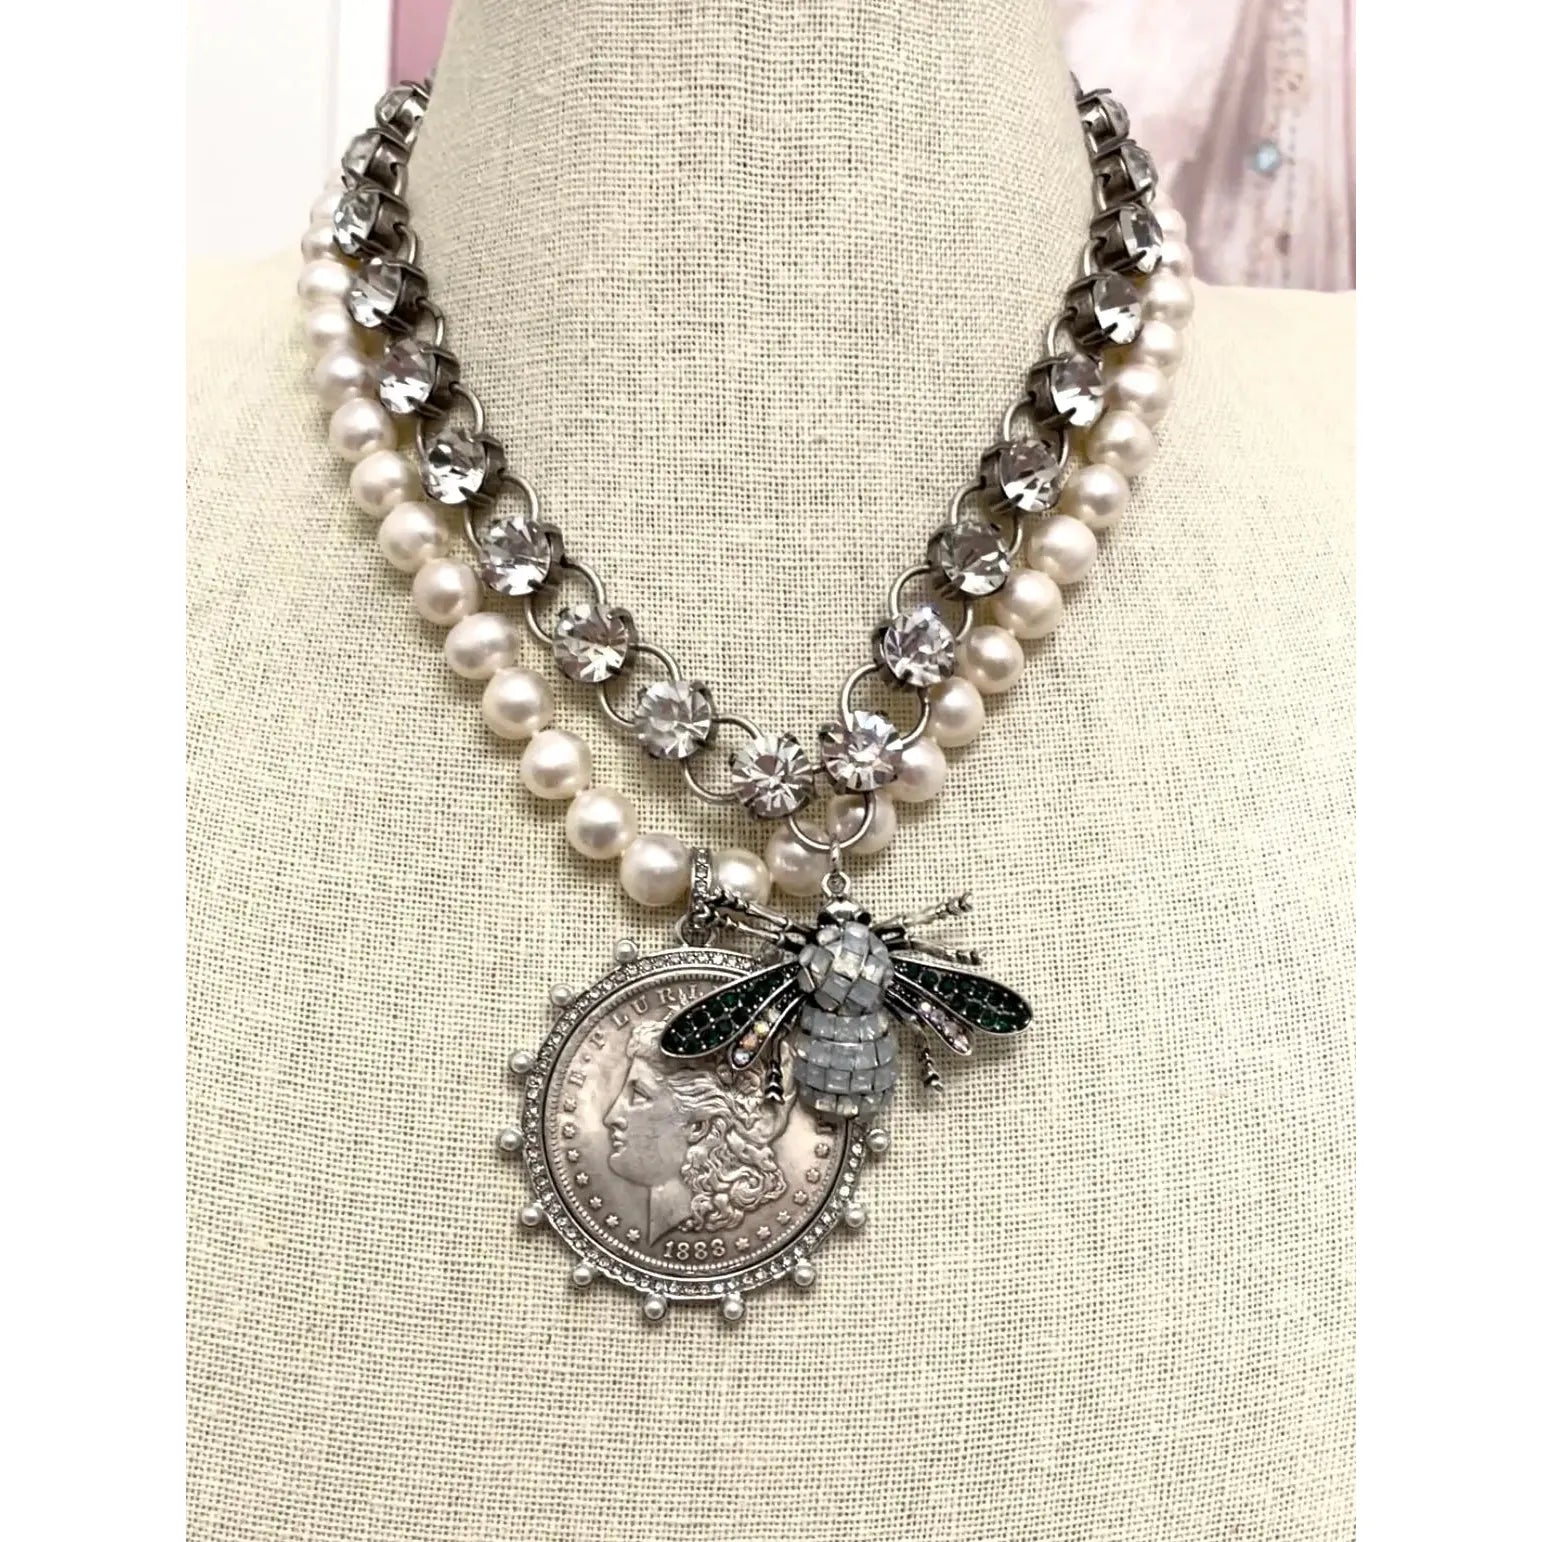 Queen Bee Swarovski Crystal Necklace - Irredescent - Image #2